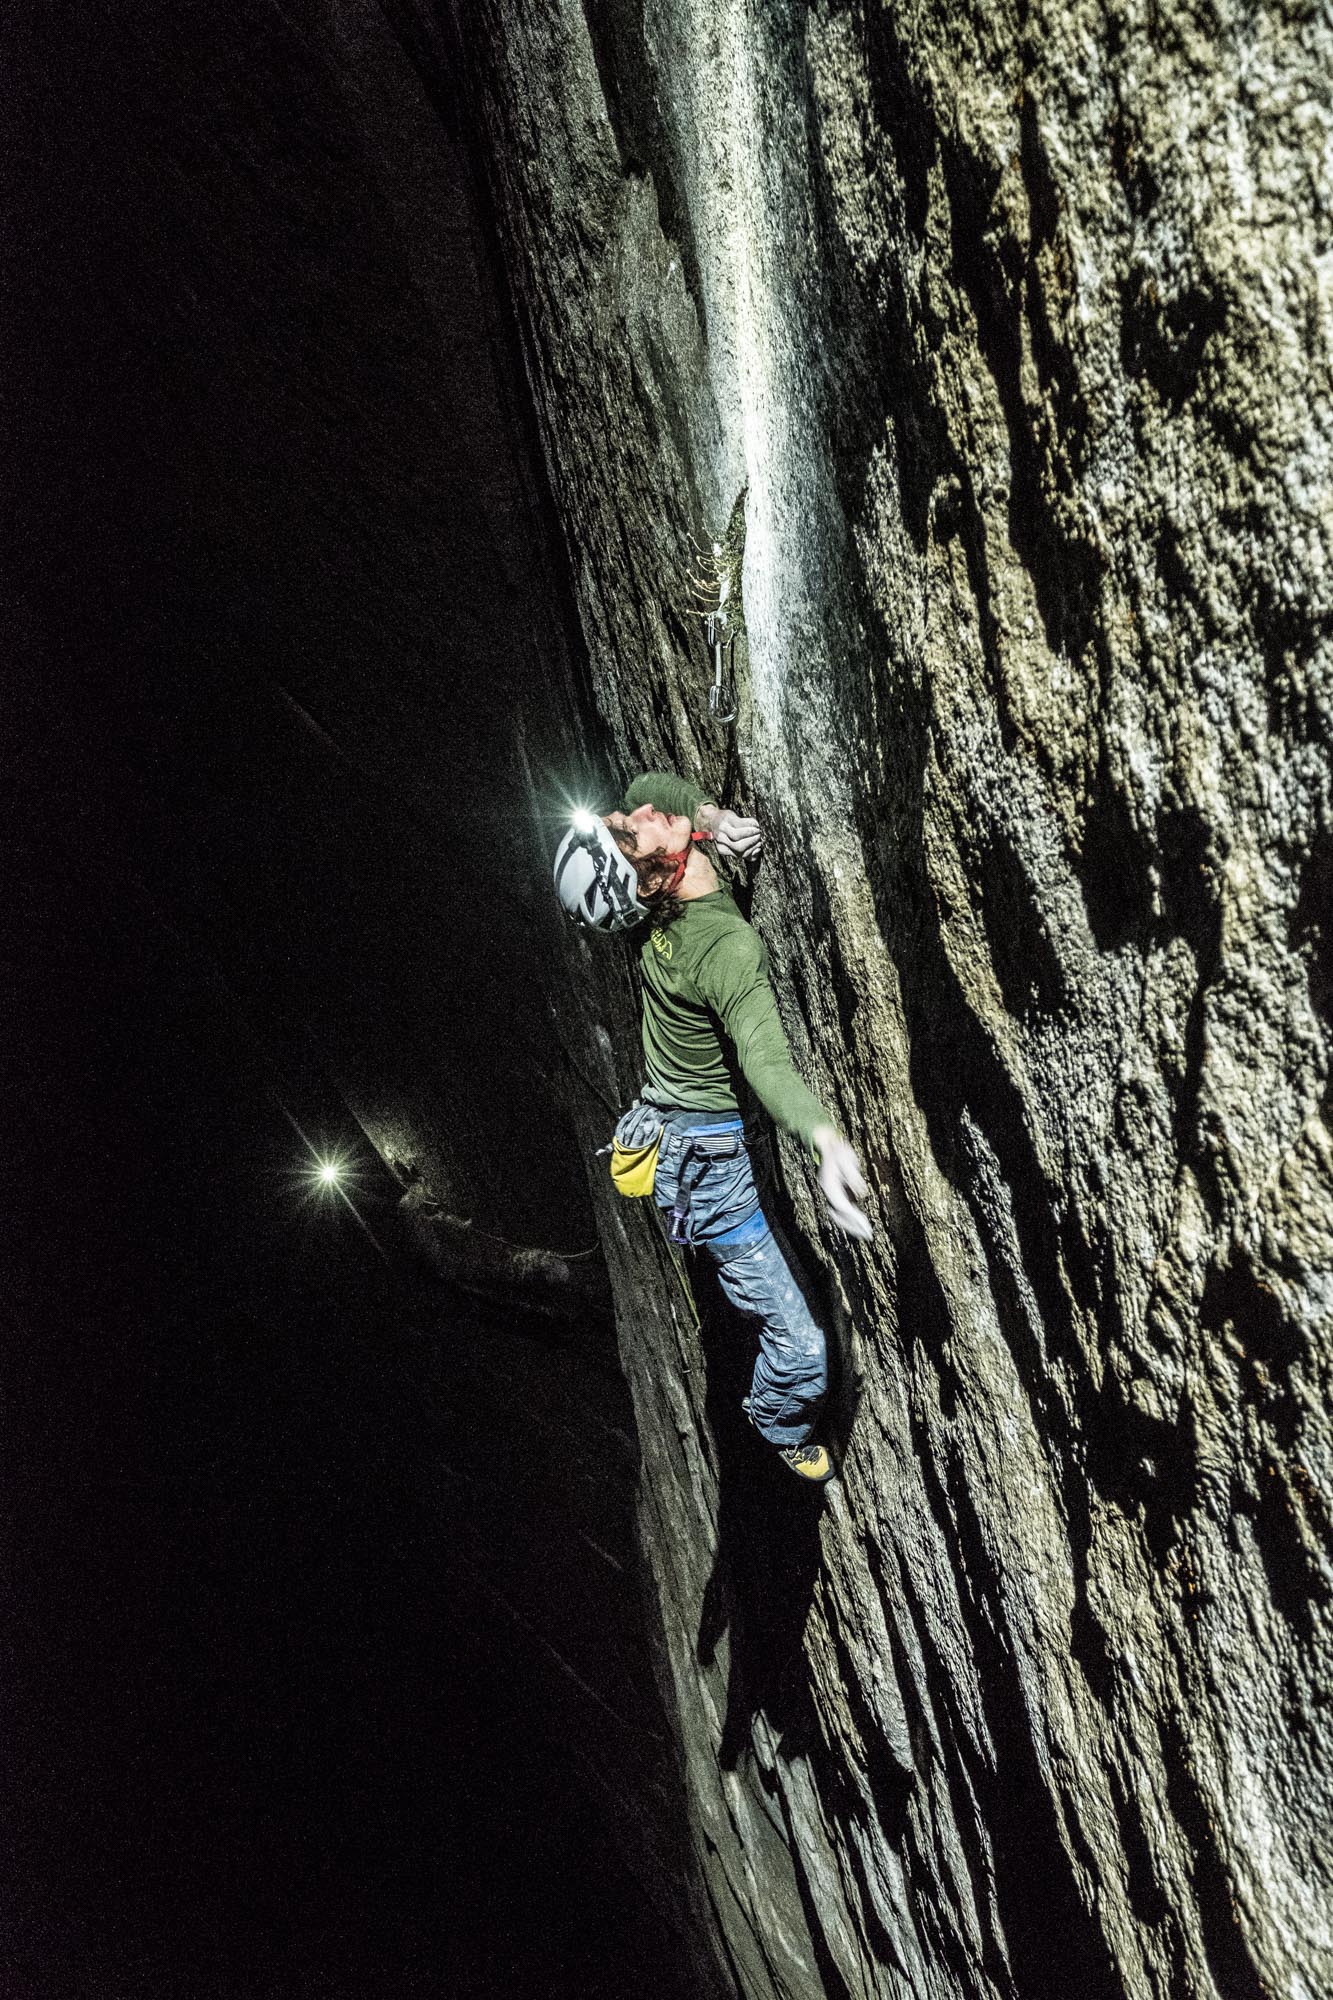 Ondra climbs Pitch 21 (5.13d) by headlamp. [Photo] Heinz Zak and Black Diamond Equipment